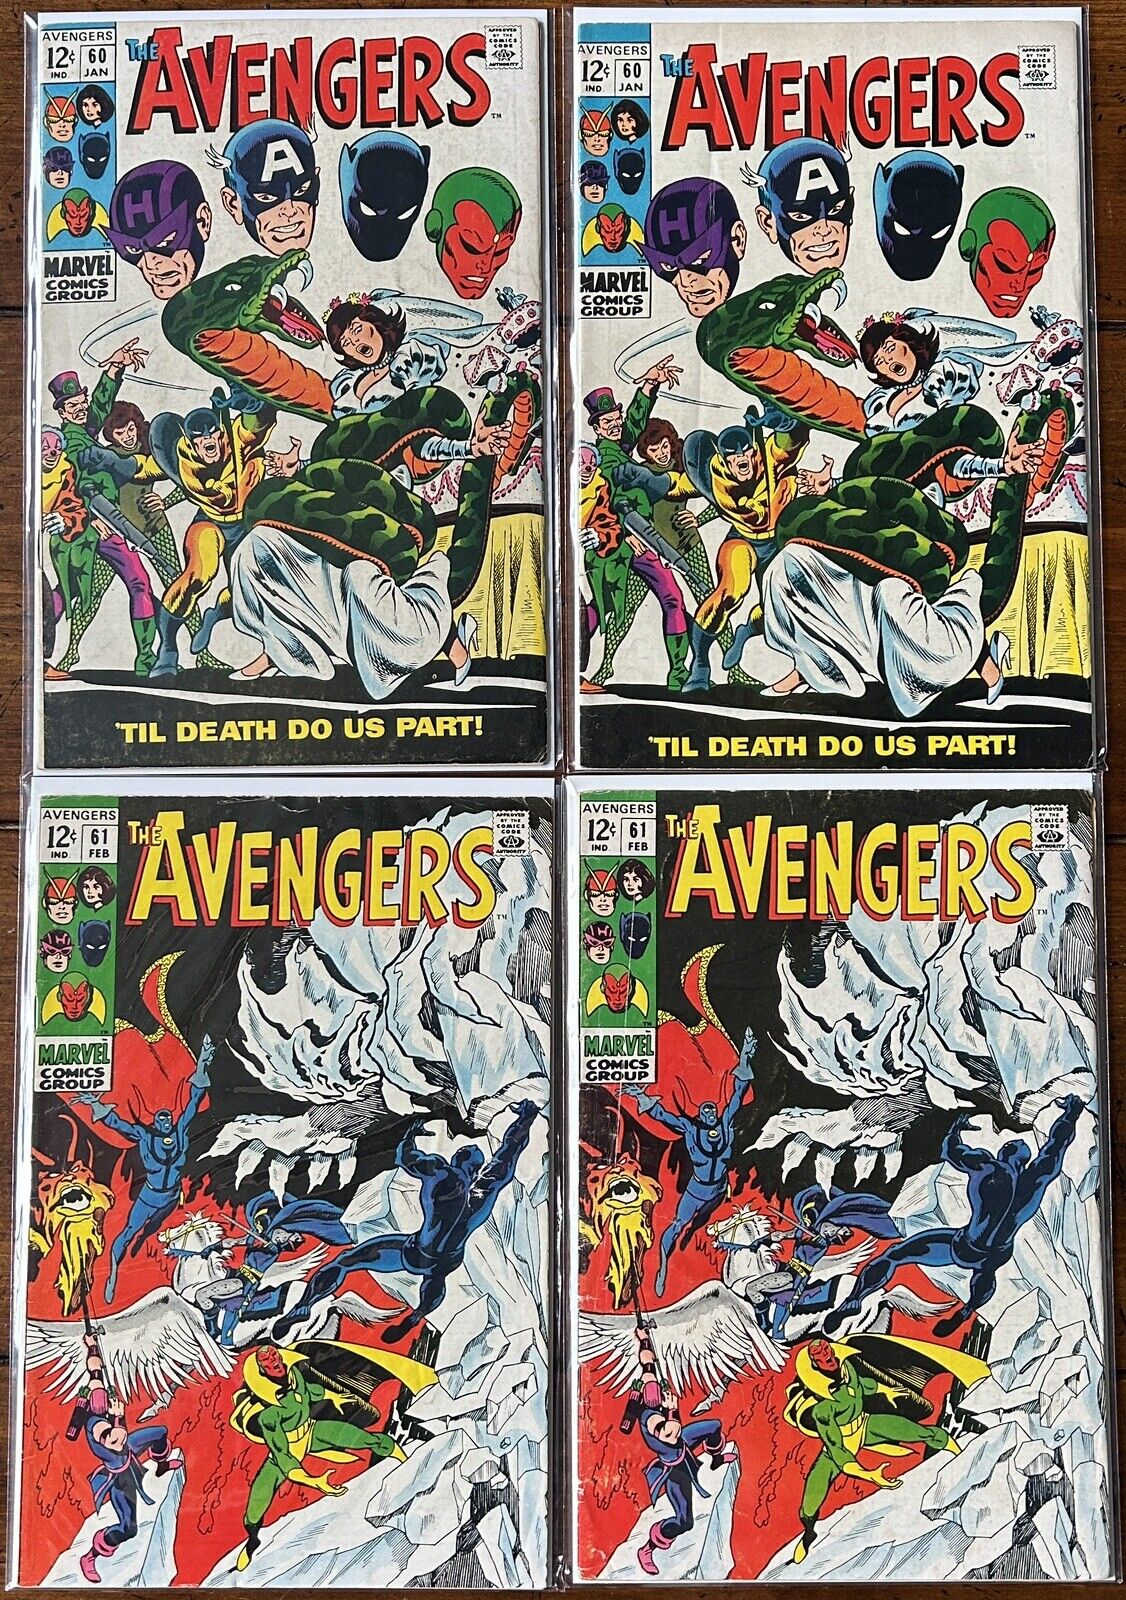 Avengers #60-77 LOT 19 comics Wasp Hank Pym marriage, M\'Baku, Clint Barton